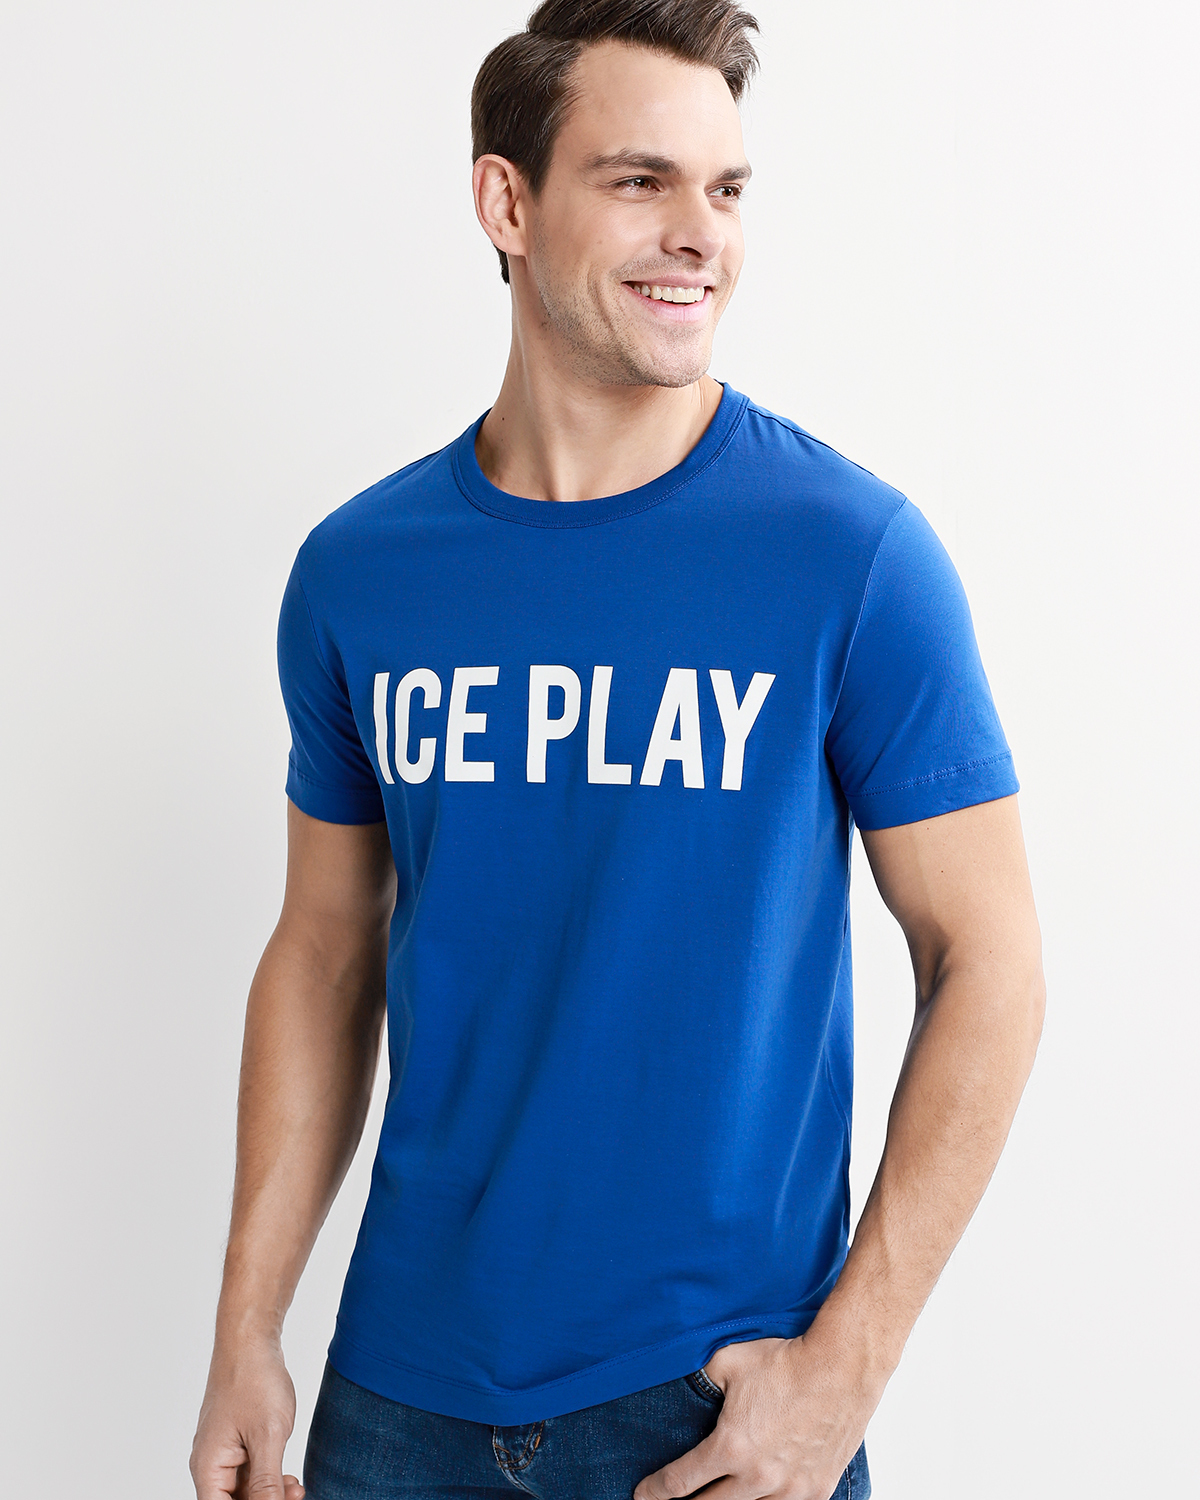 Ice player